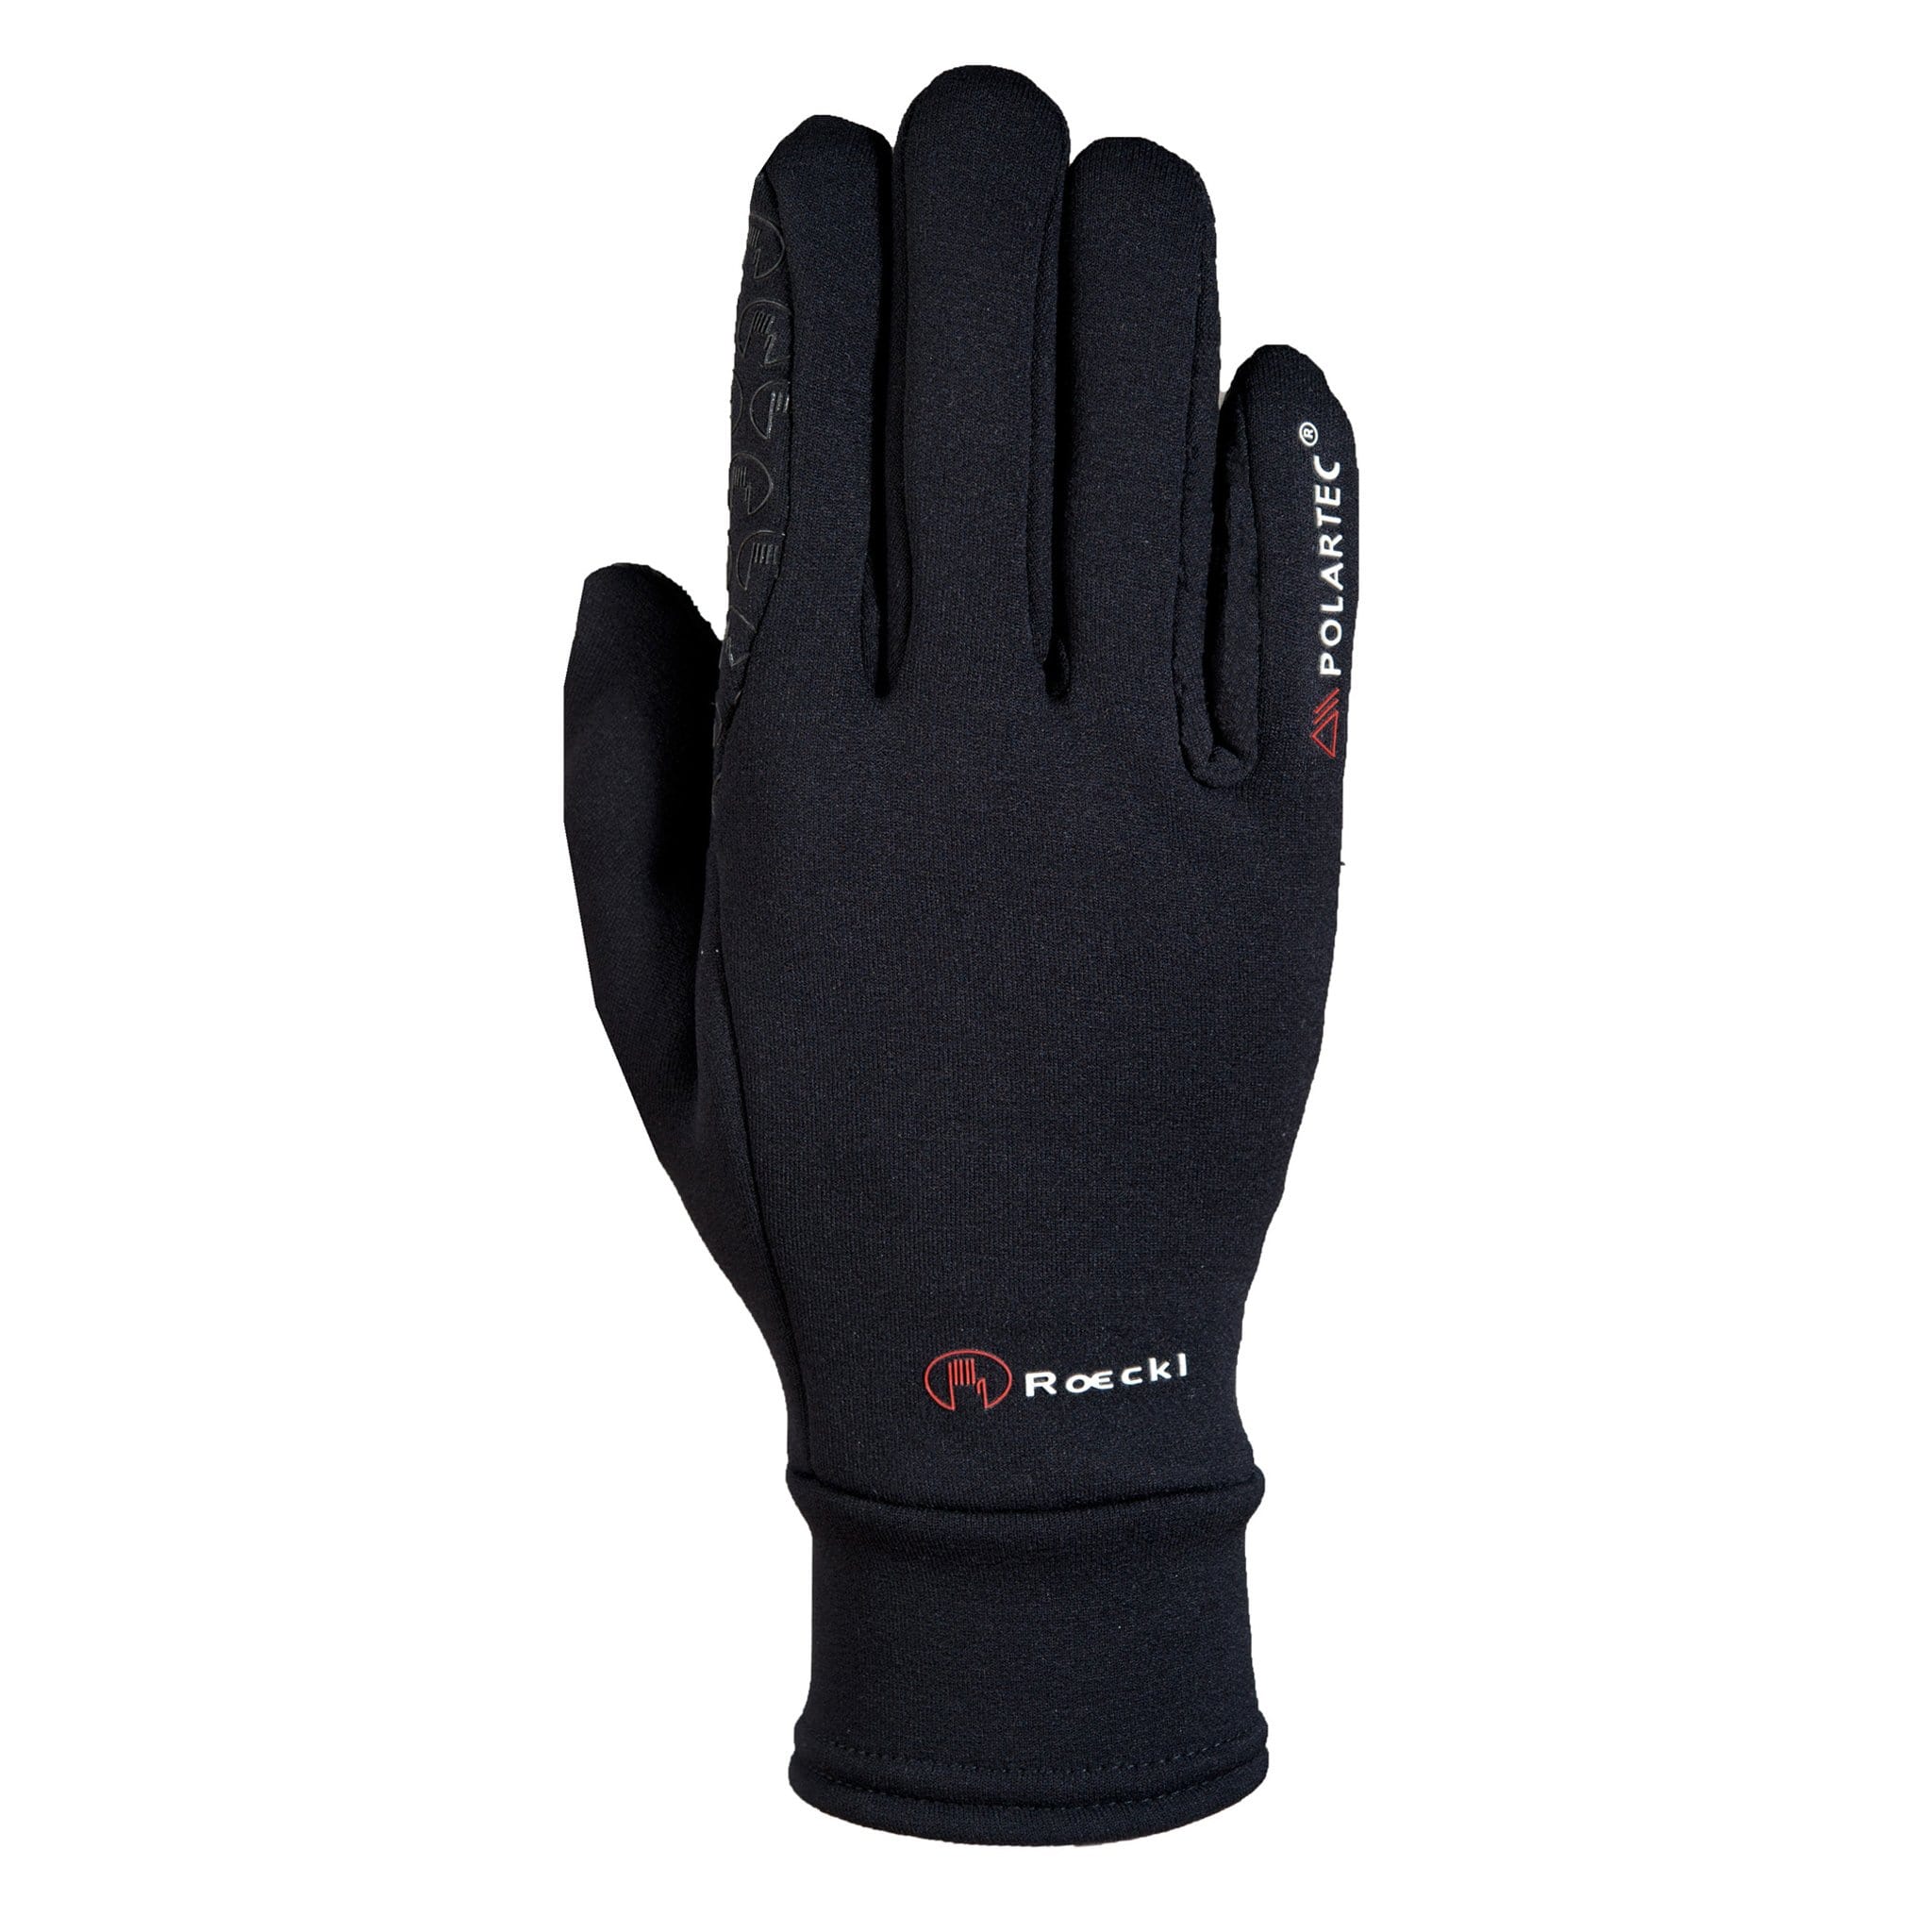 Roeckl Polartec Gloves Black 3301-624-000